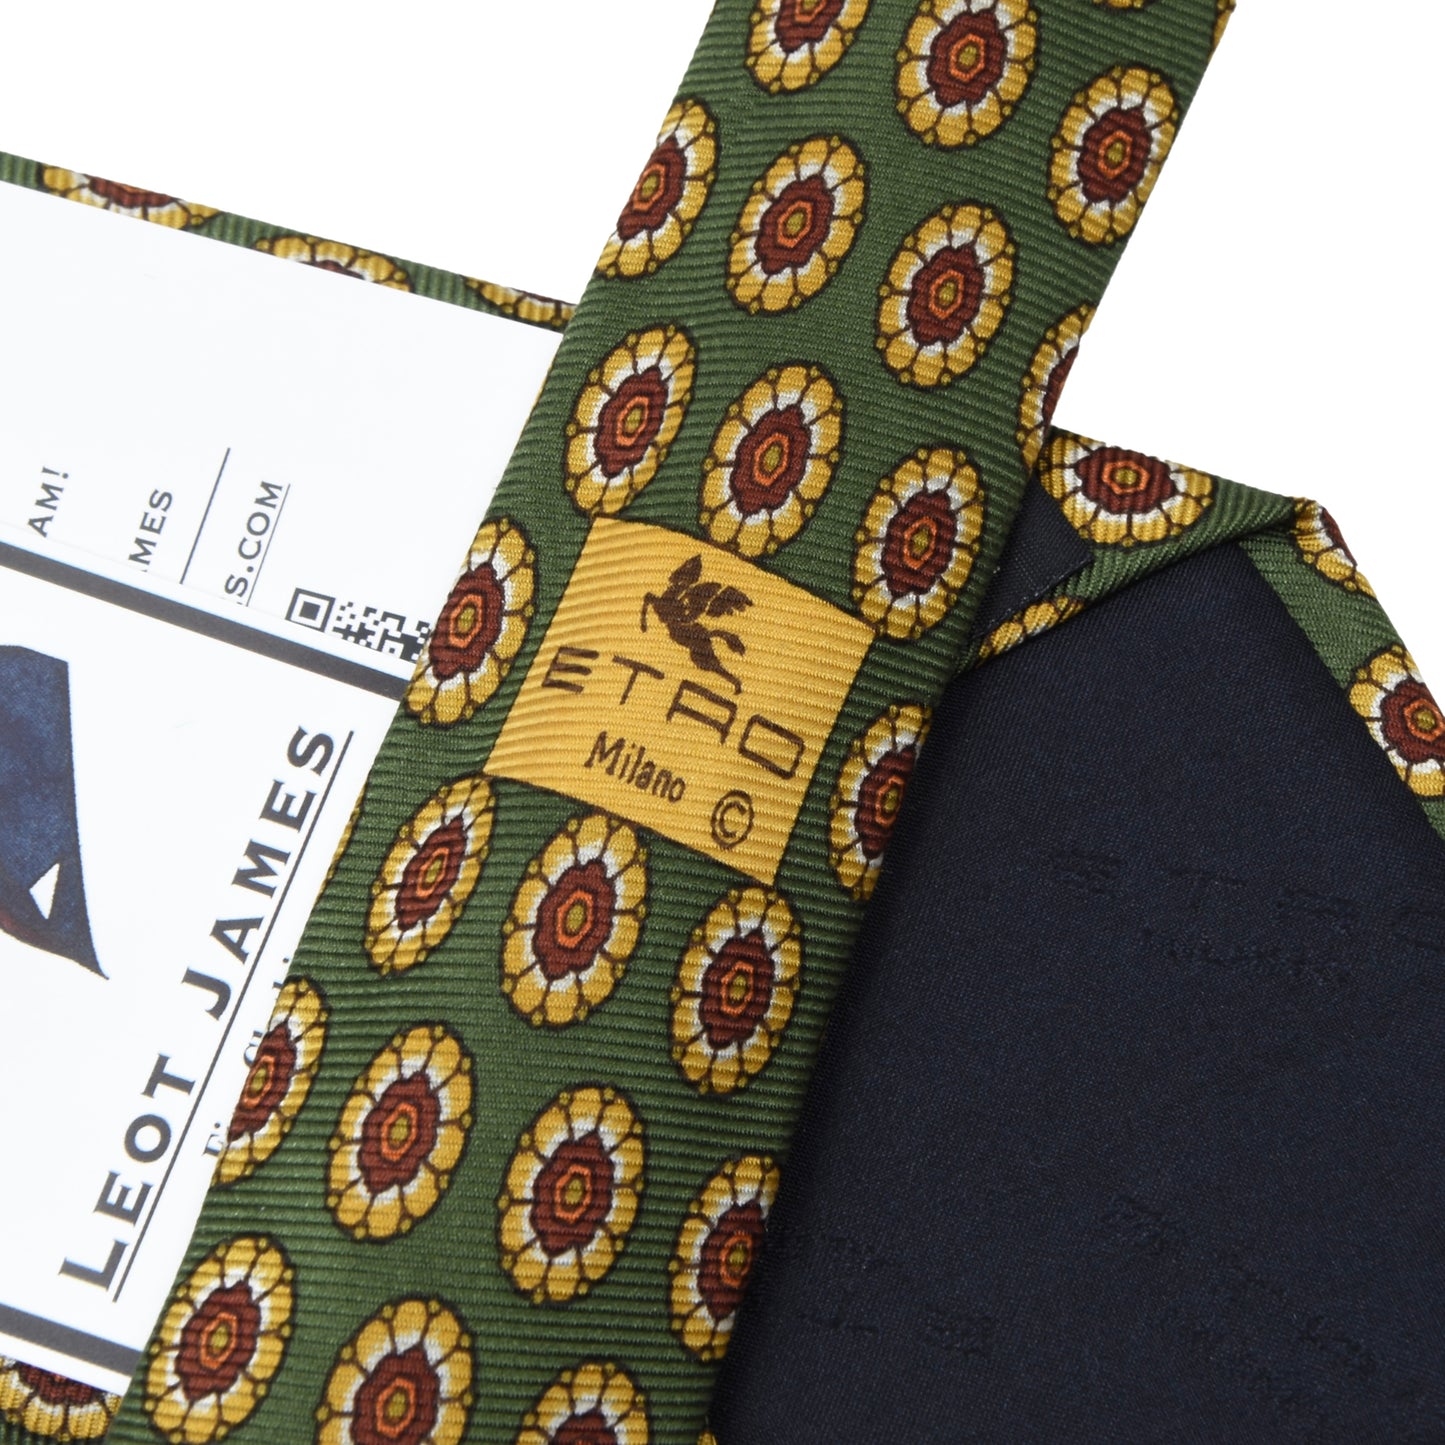 Etro Milano Silk Tie - Floral Neat